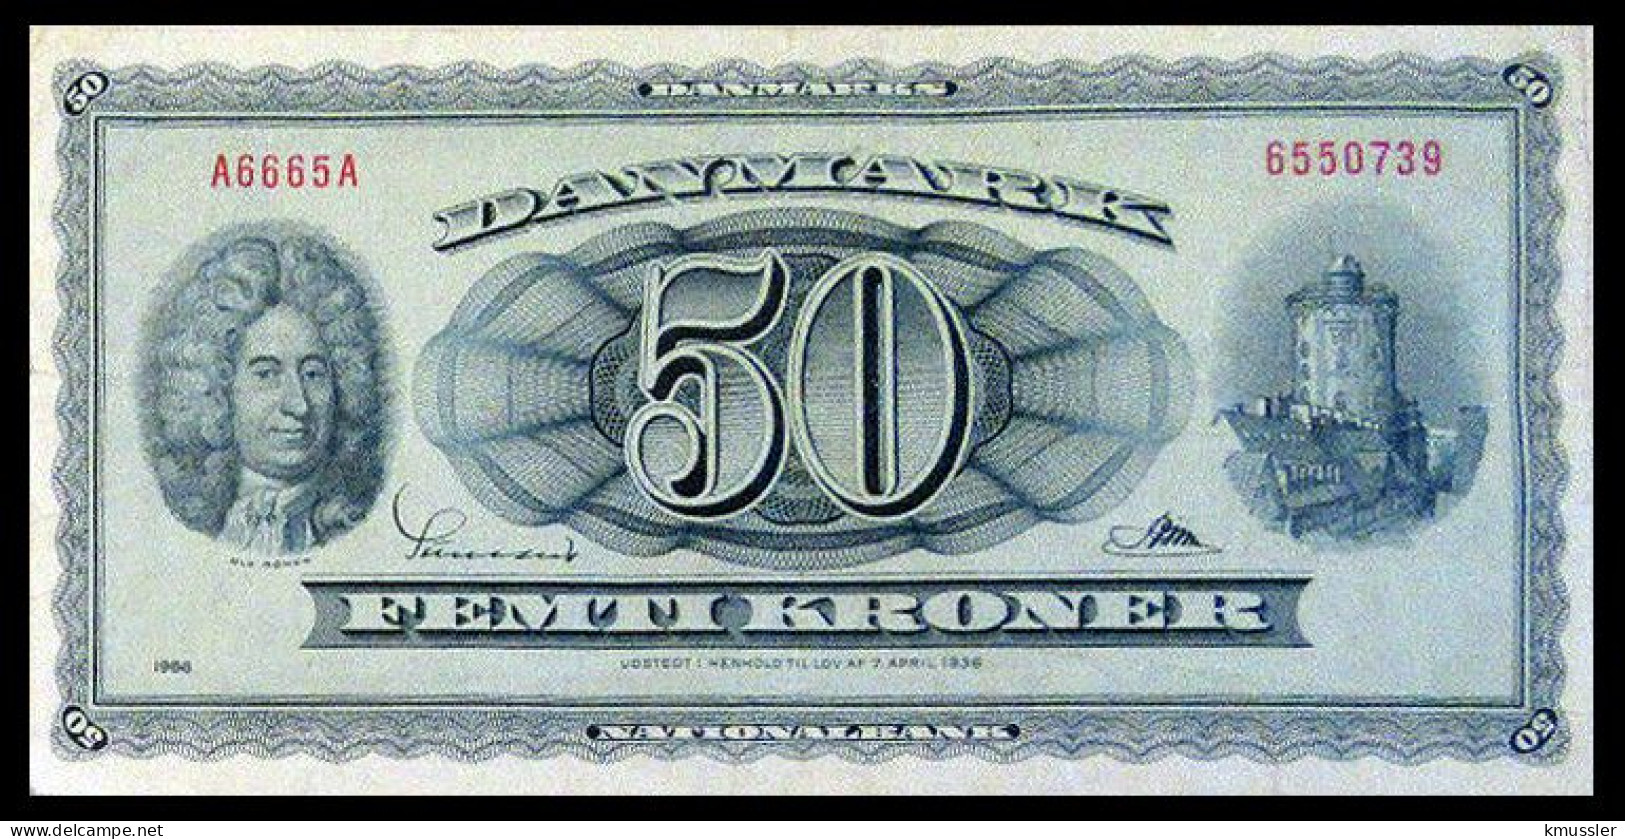 # # # Banknote Dänemark (Denmark) 50 Kroner 1936 # # # - Denemarken